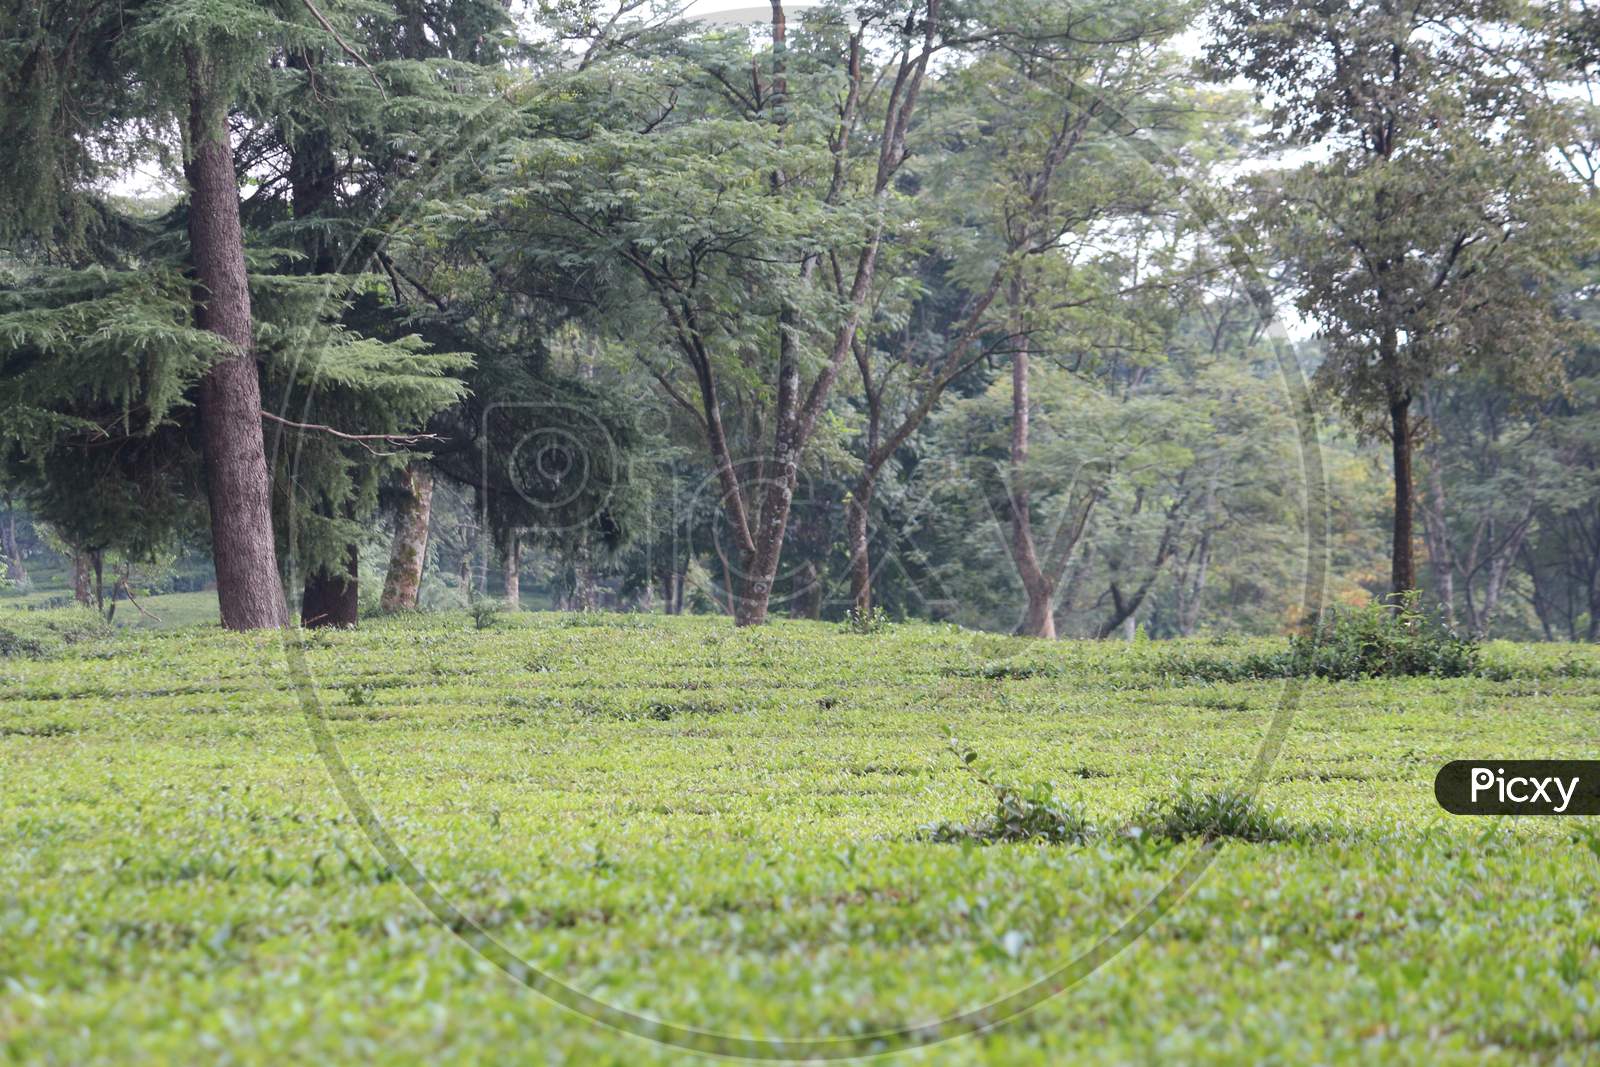 A tea plantation in Palampur